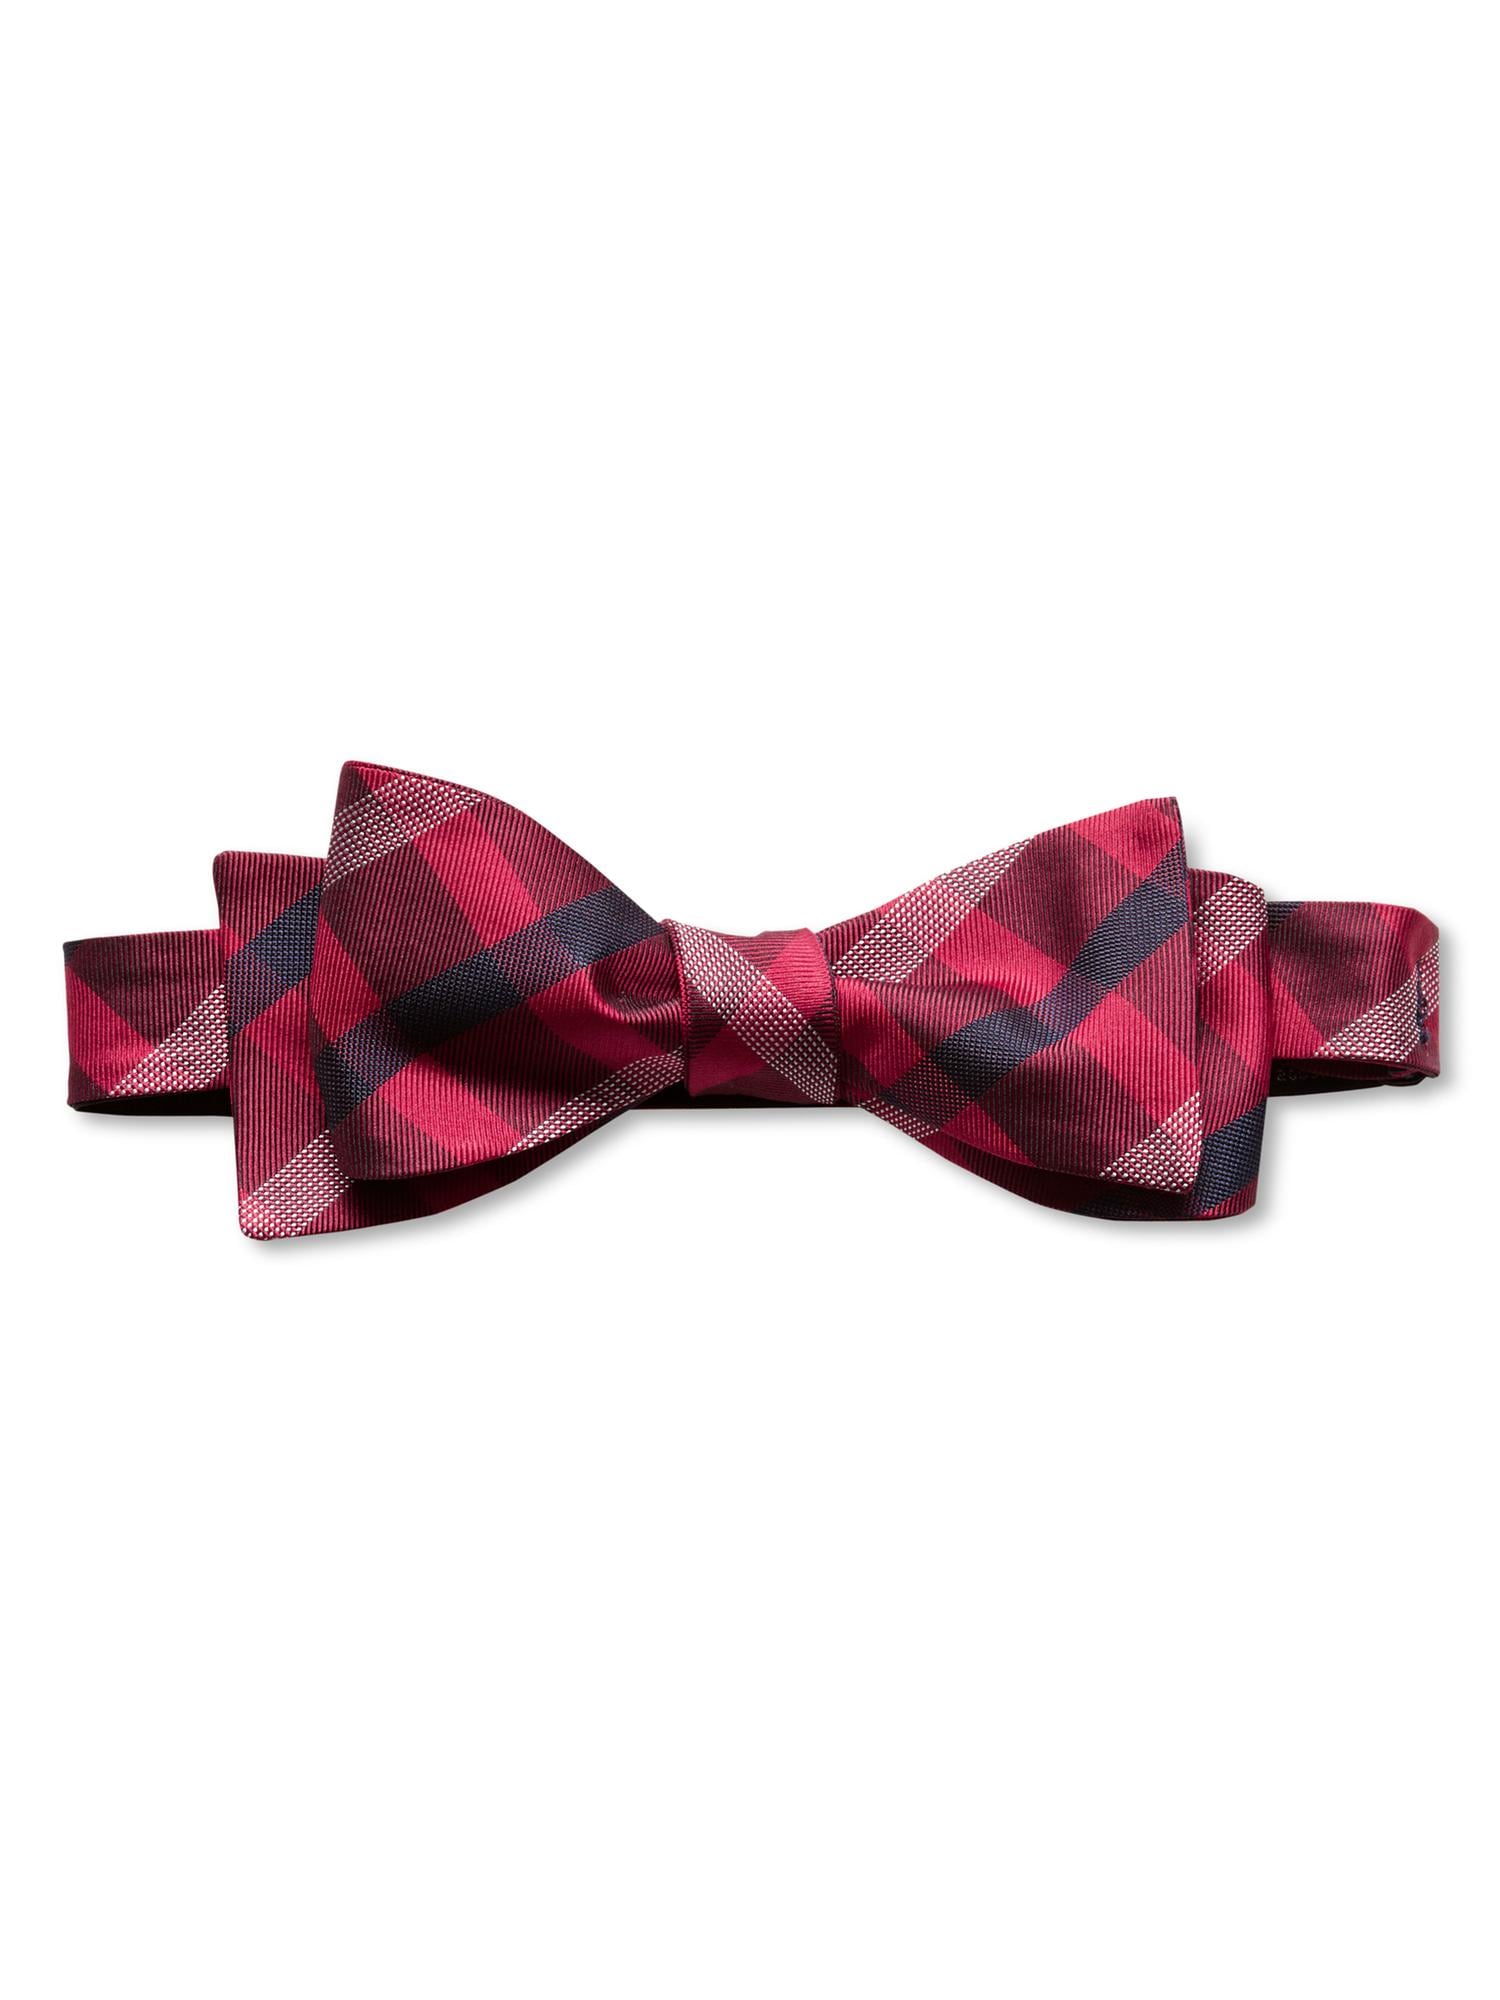 Plaid silk bow tie